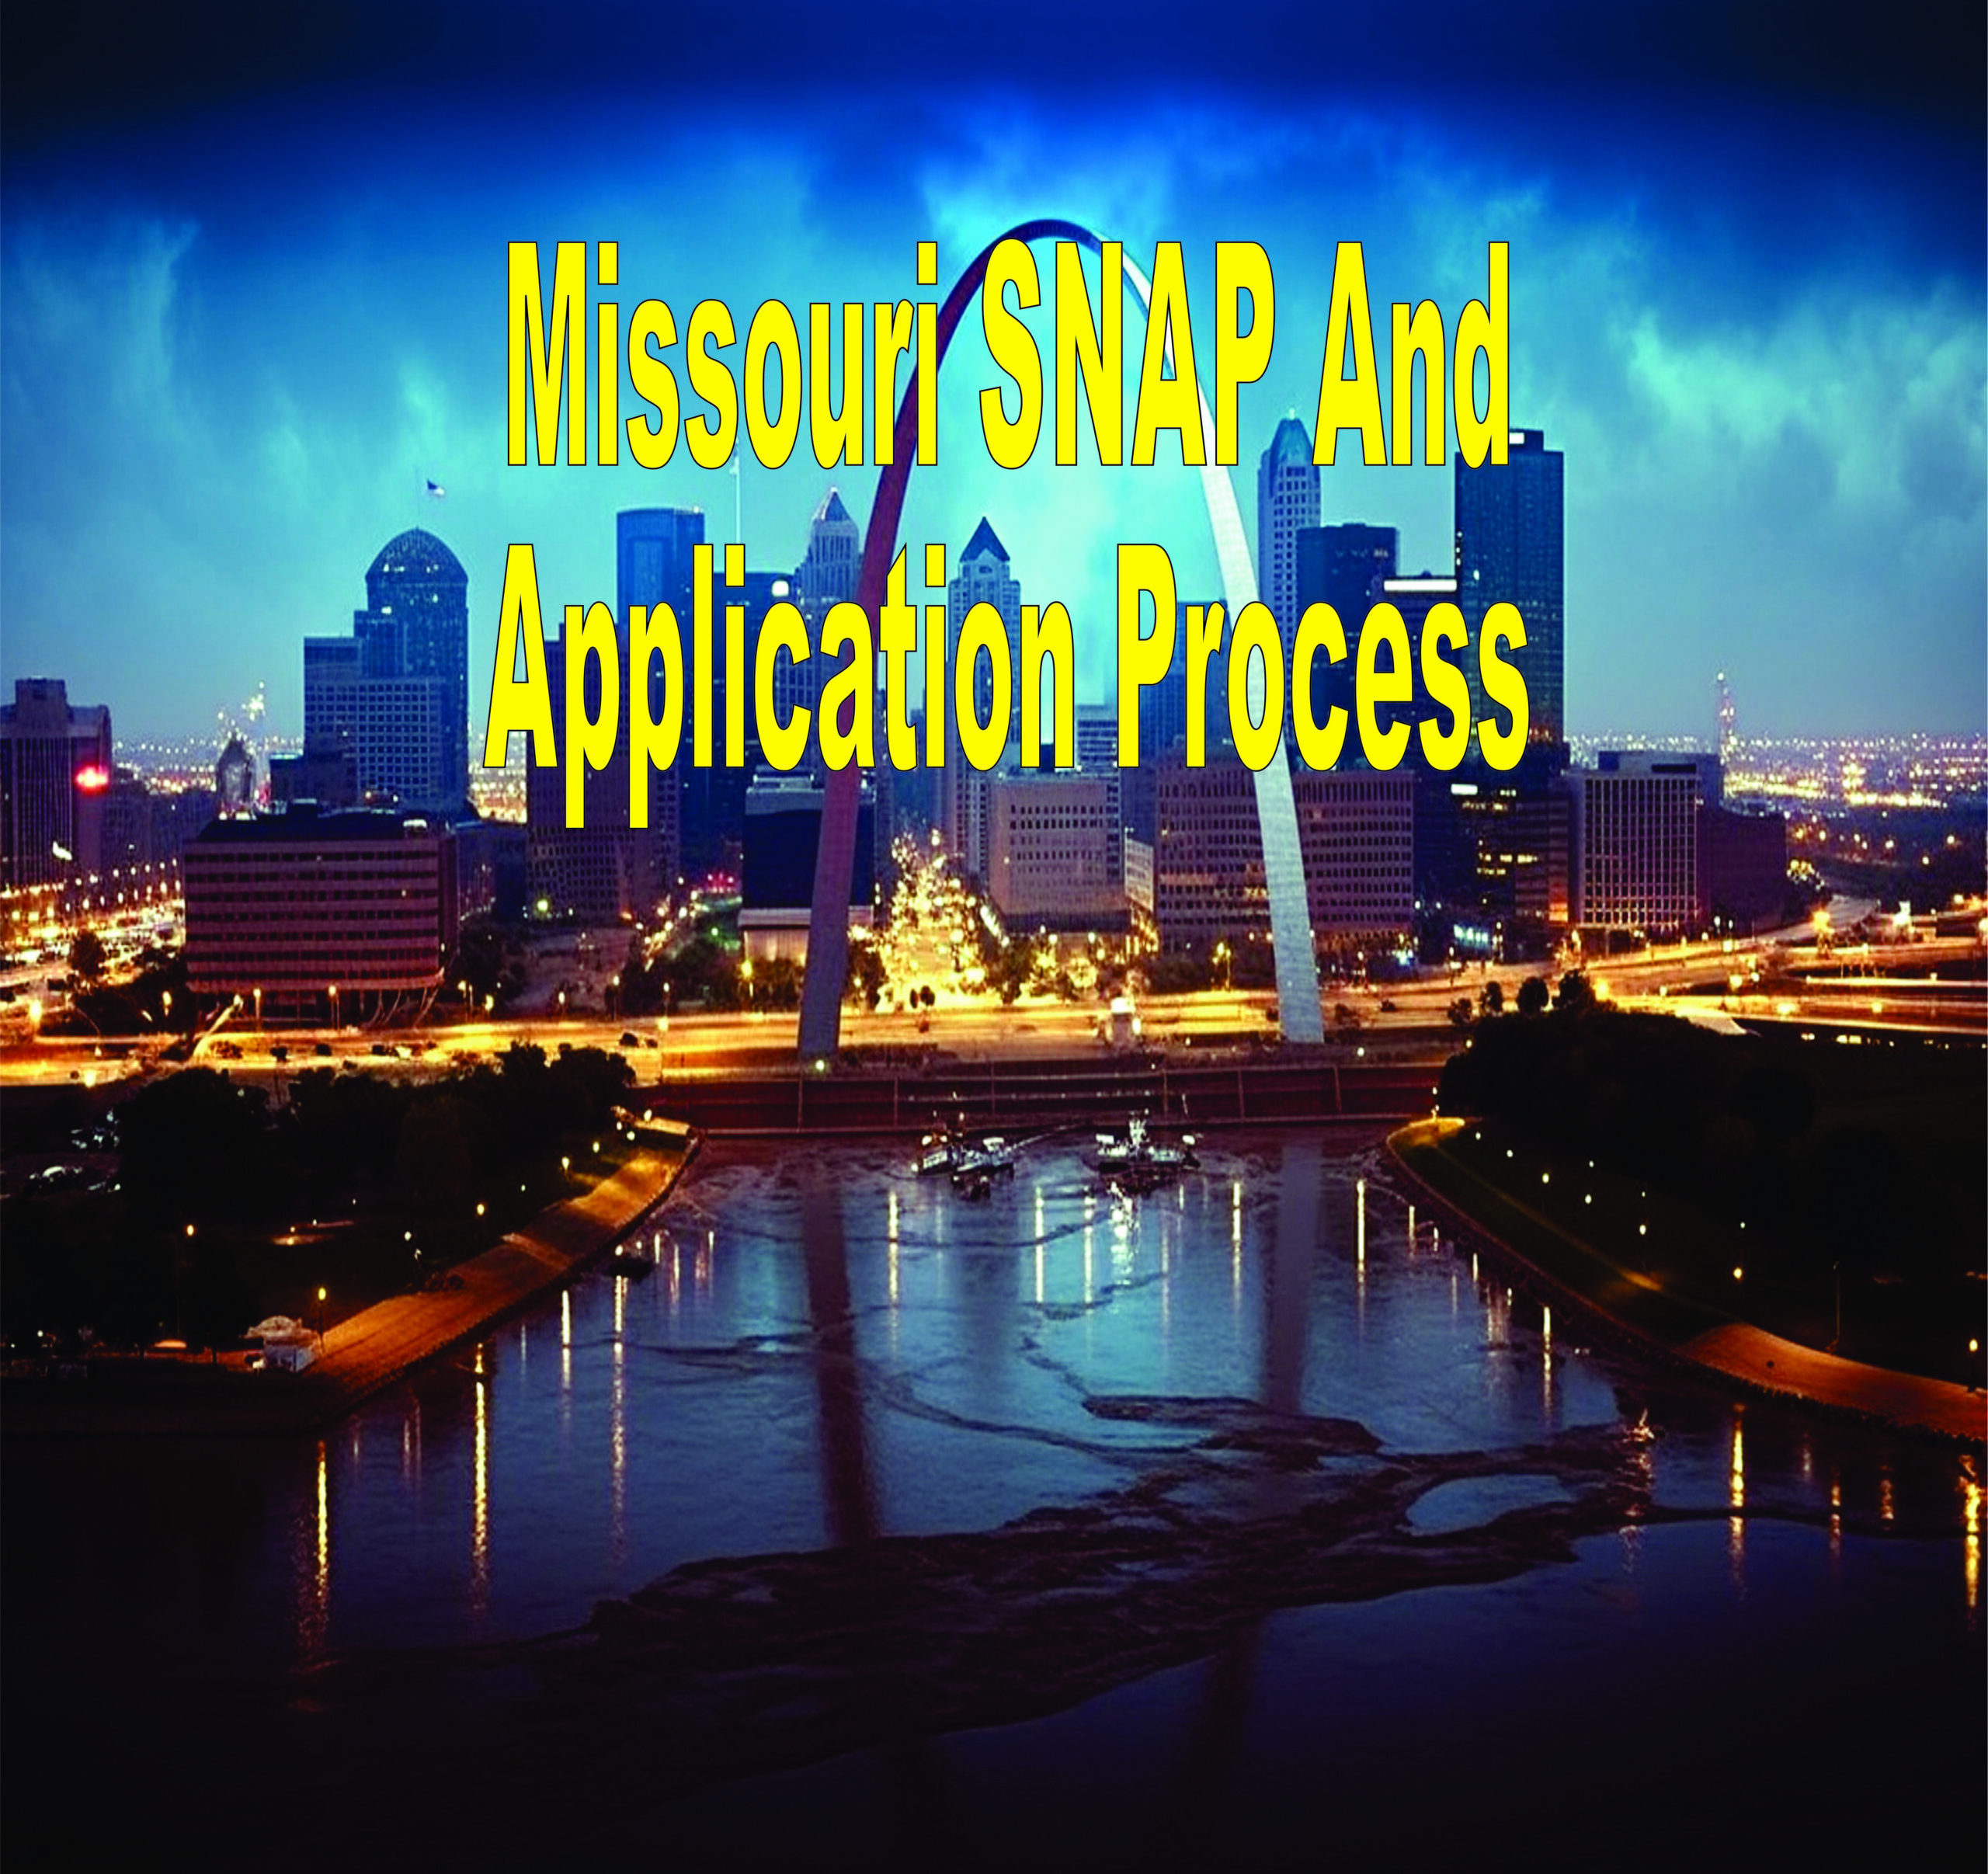 Missouri Snap And Application Process